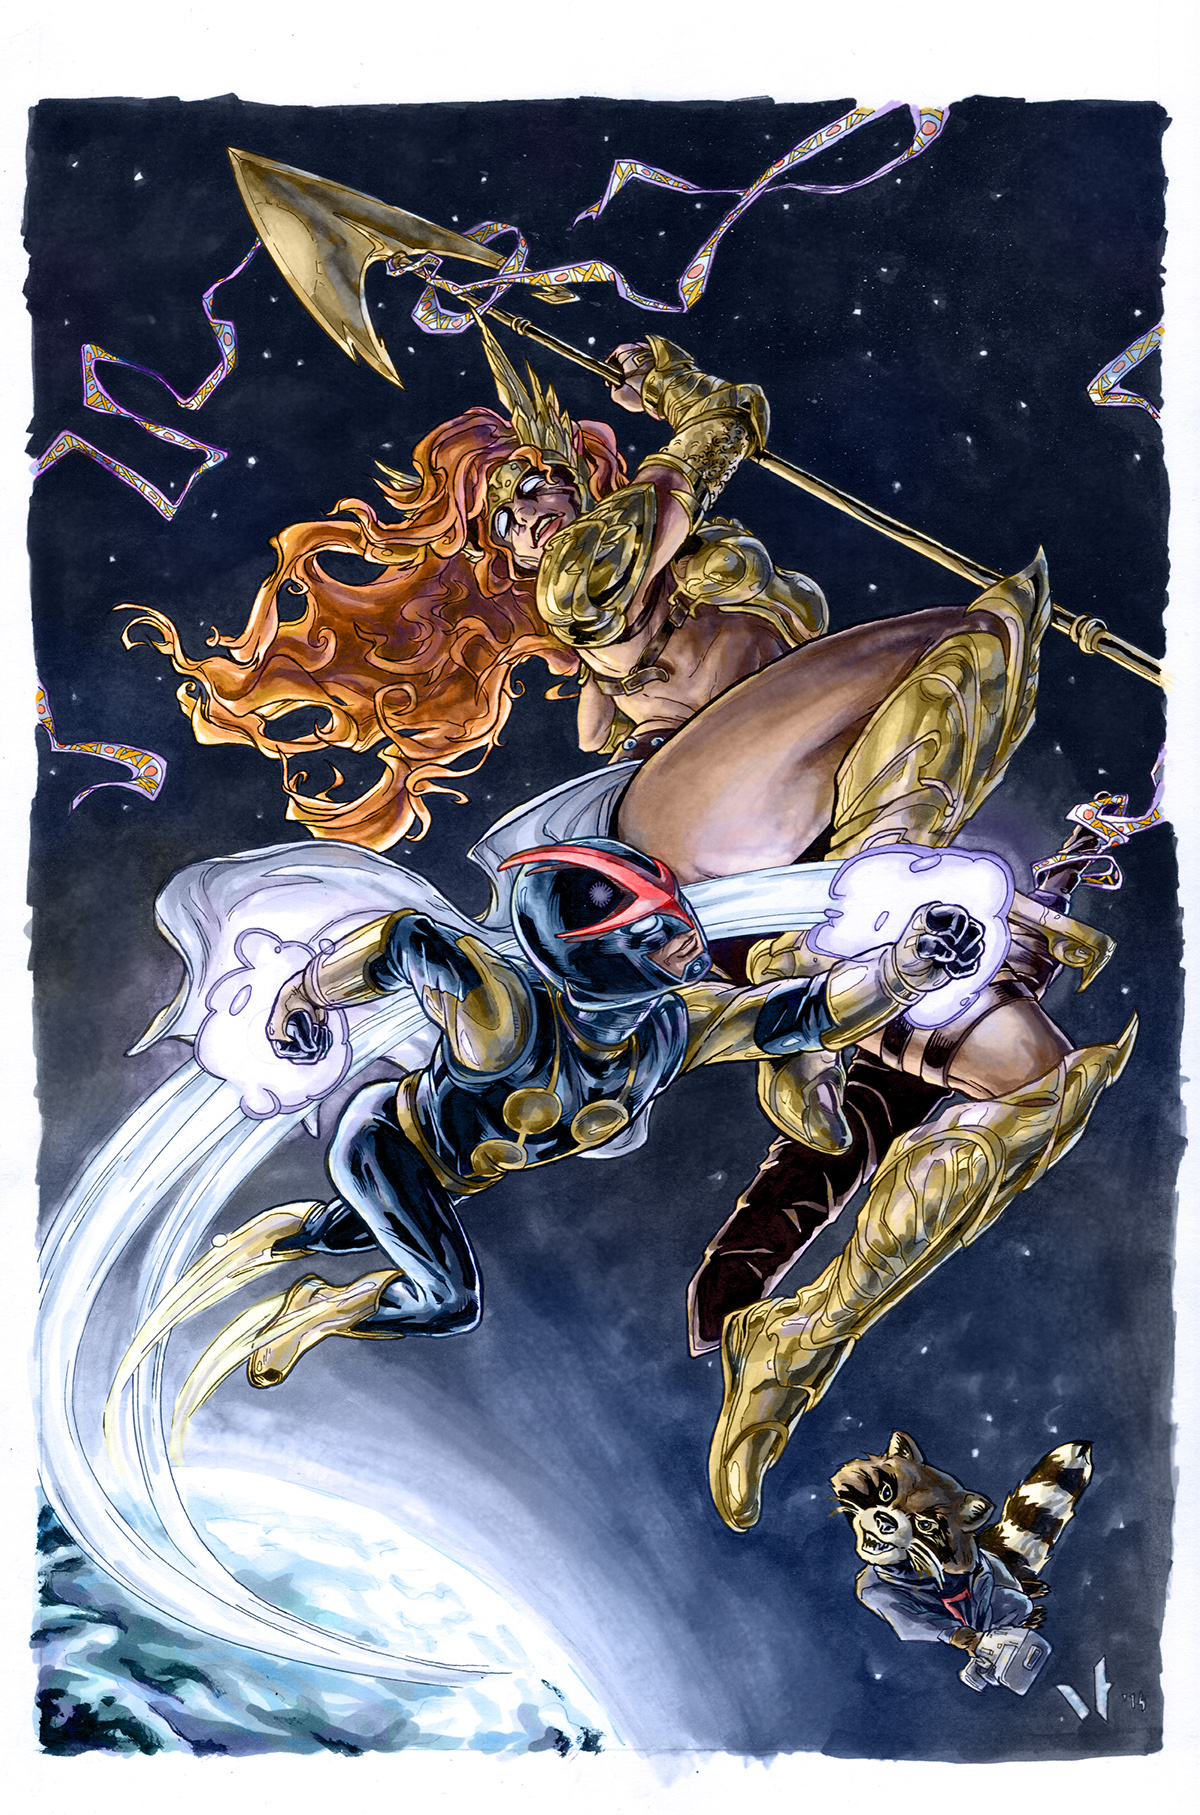 Guardians of the galaxy Nova Angela iron fist k'un lun SuperHero pin ups pin-up comics Fan Art spawn Kubert School gouache watercolor